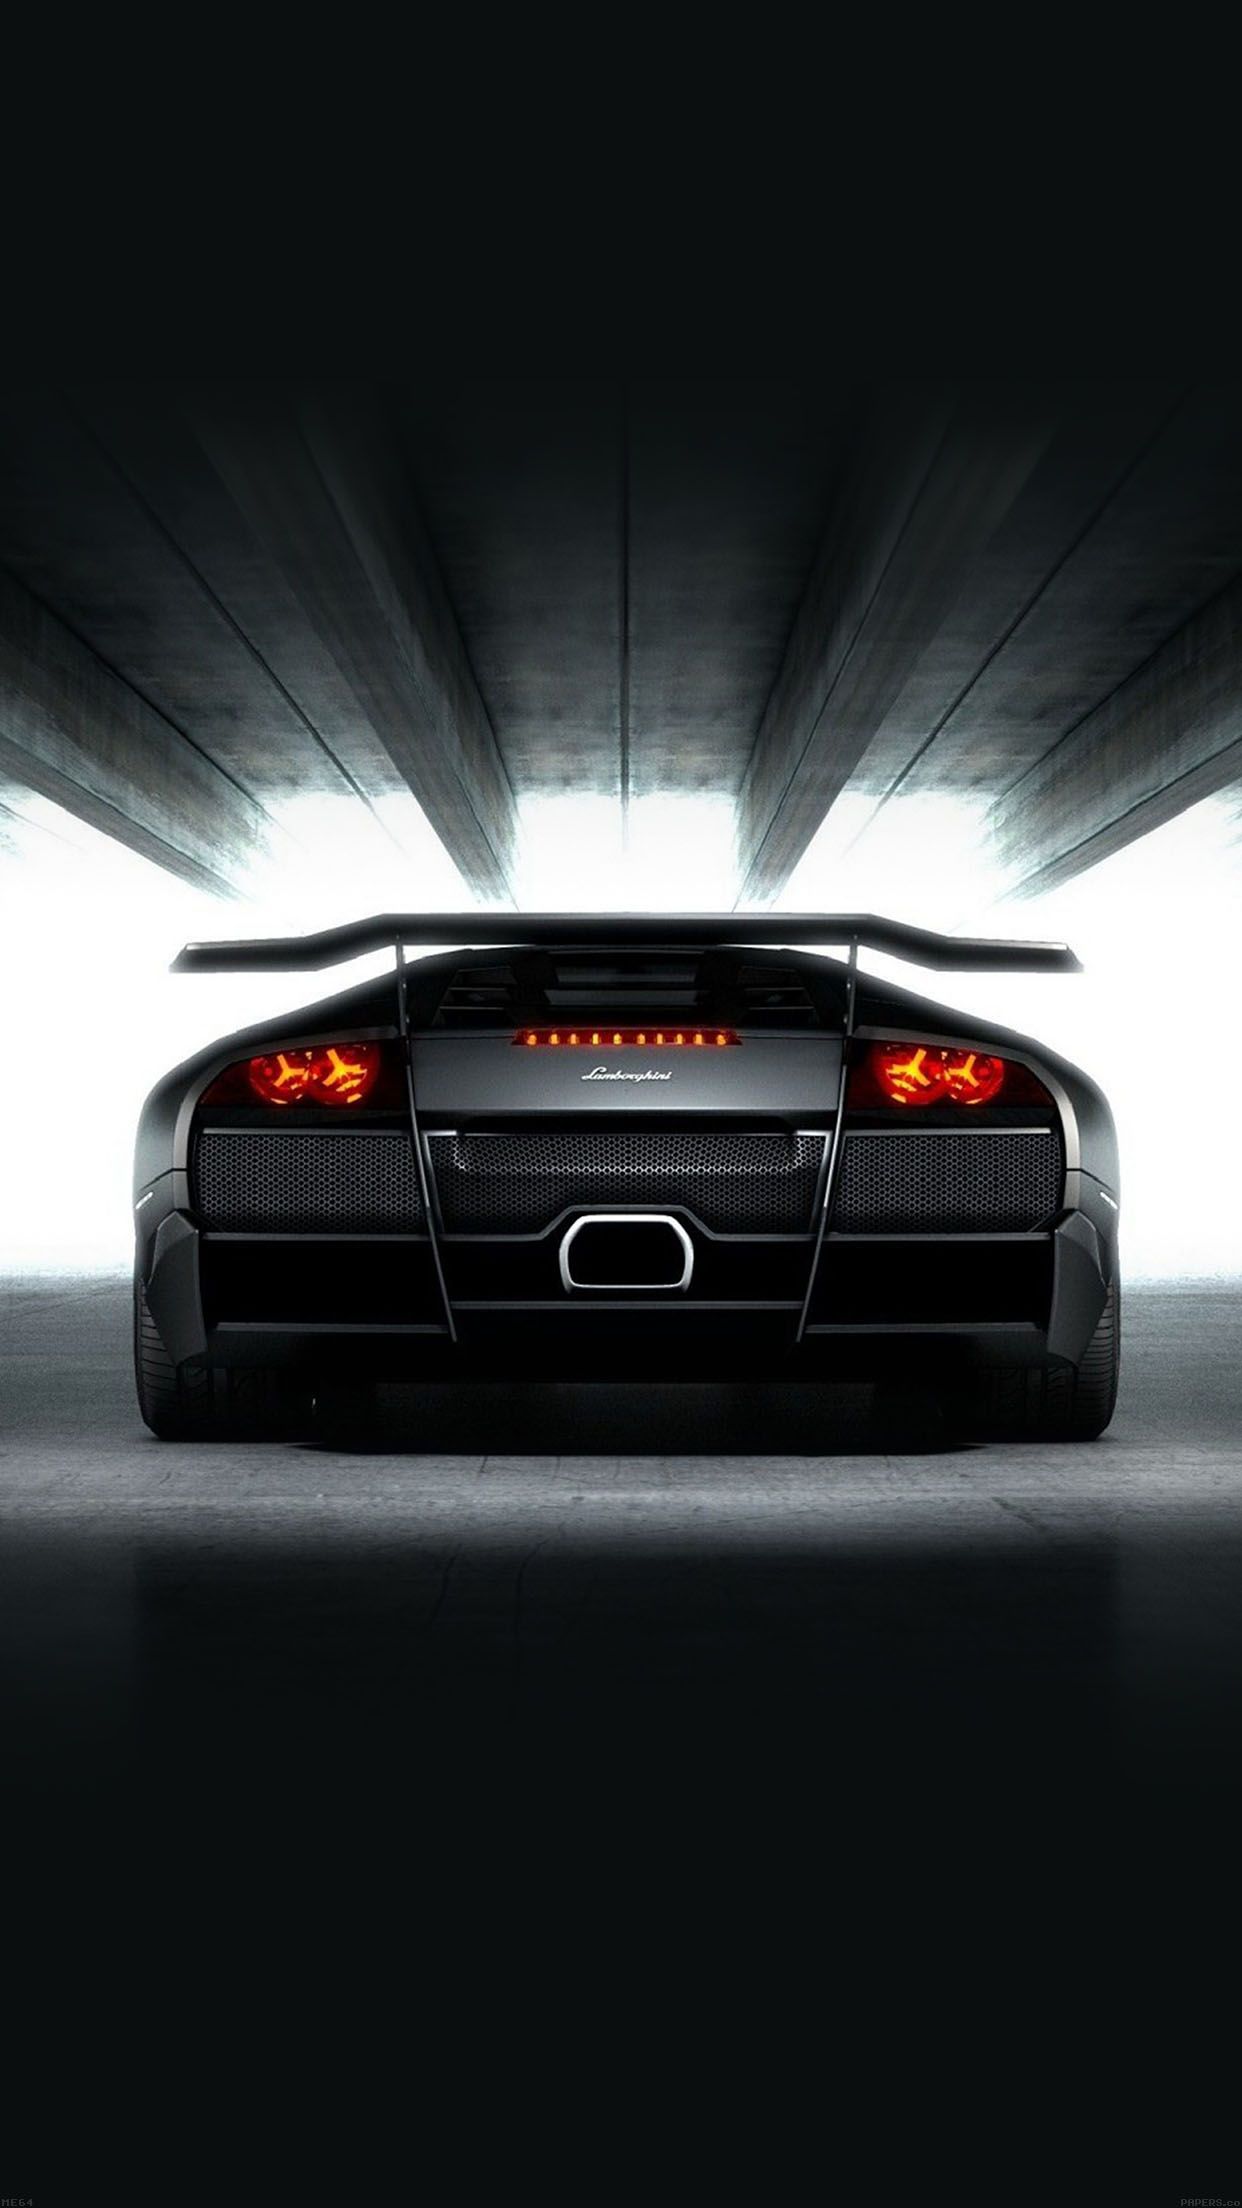 Lamborghini iPhone Background. Lamborghini Logo Wallpaper, Lamborghini Wallpaper and Lamborghini Cool Cars Background